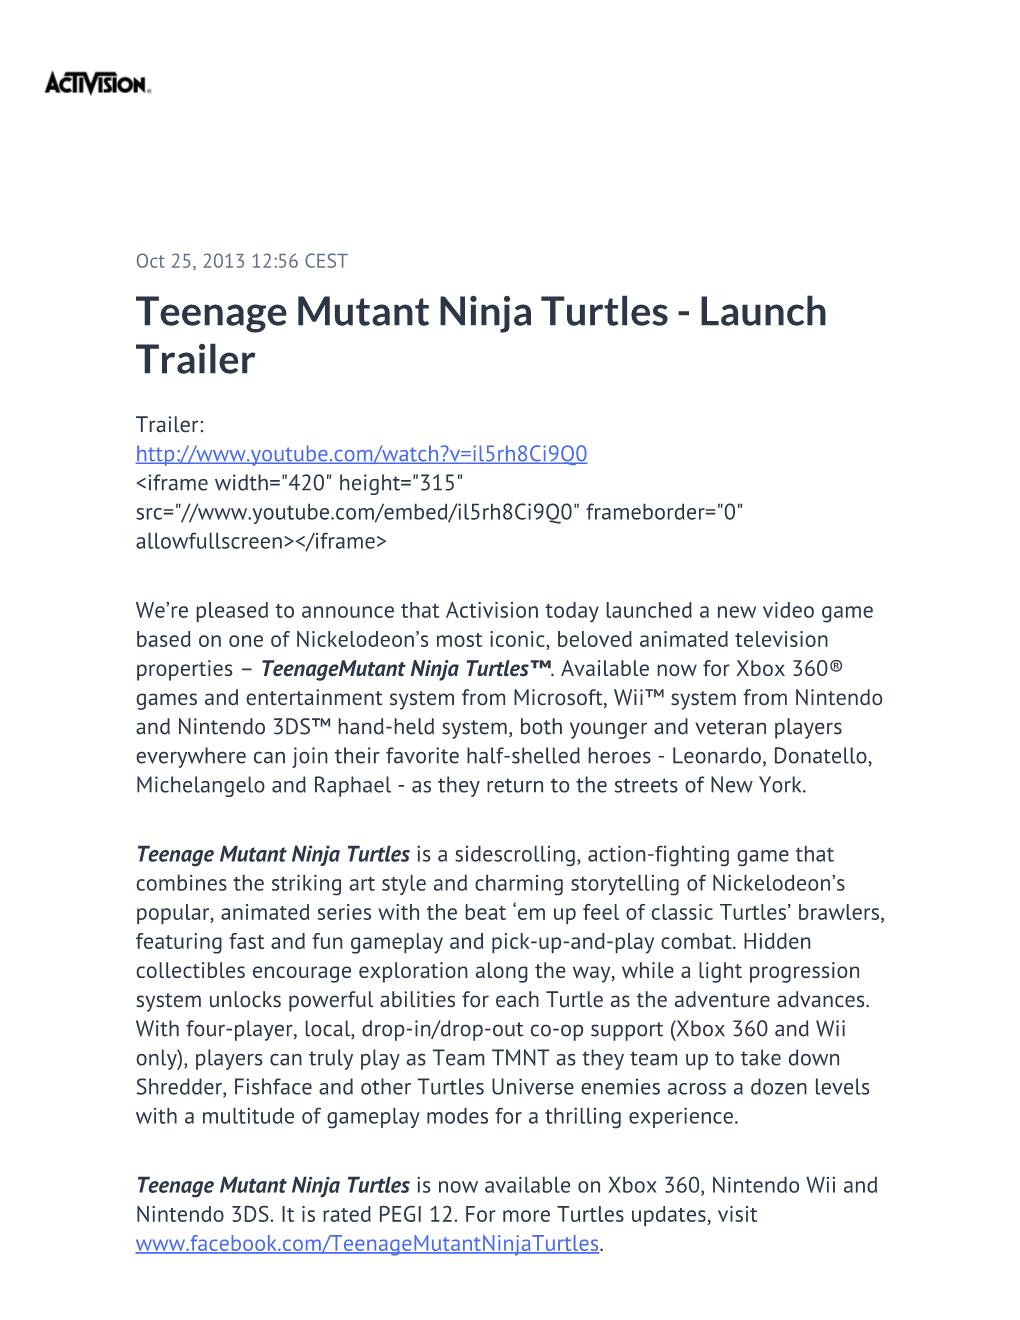 Teenage Mutant Ninja Turtles - Launch Trailer